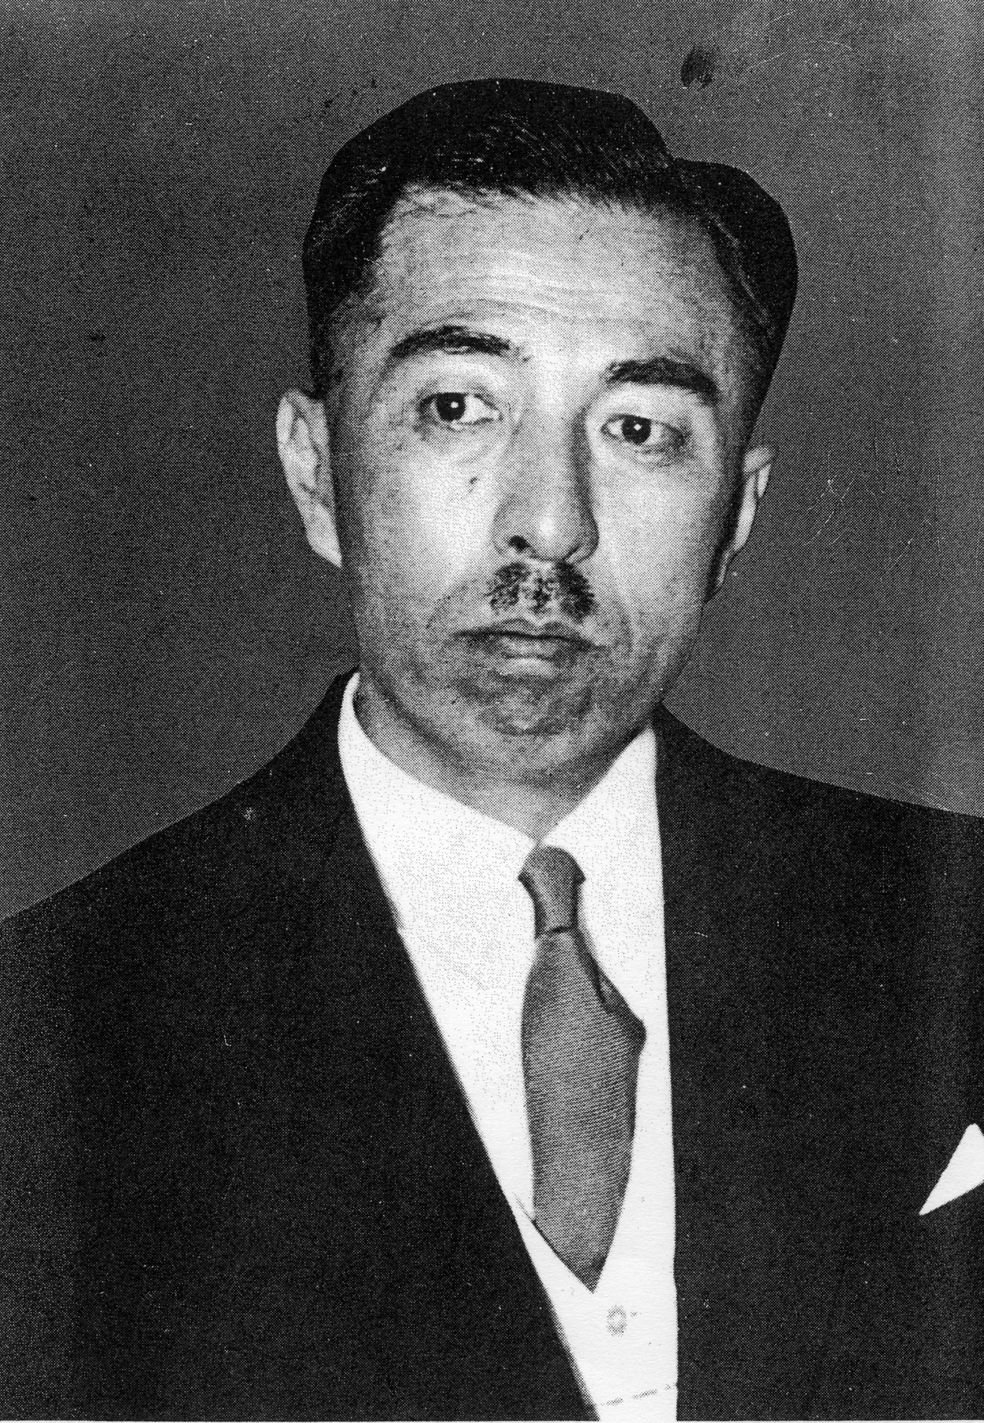 Portrait of Japanese Prime Minister Fumimaro Konoe, date unknown